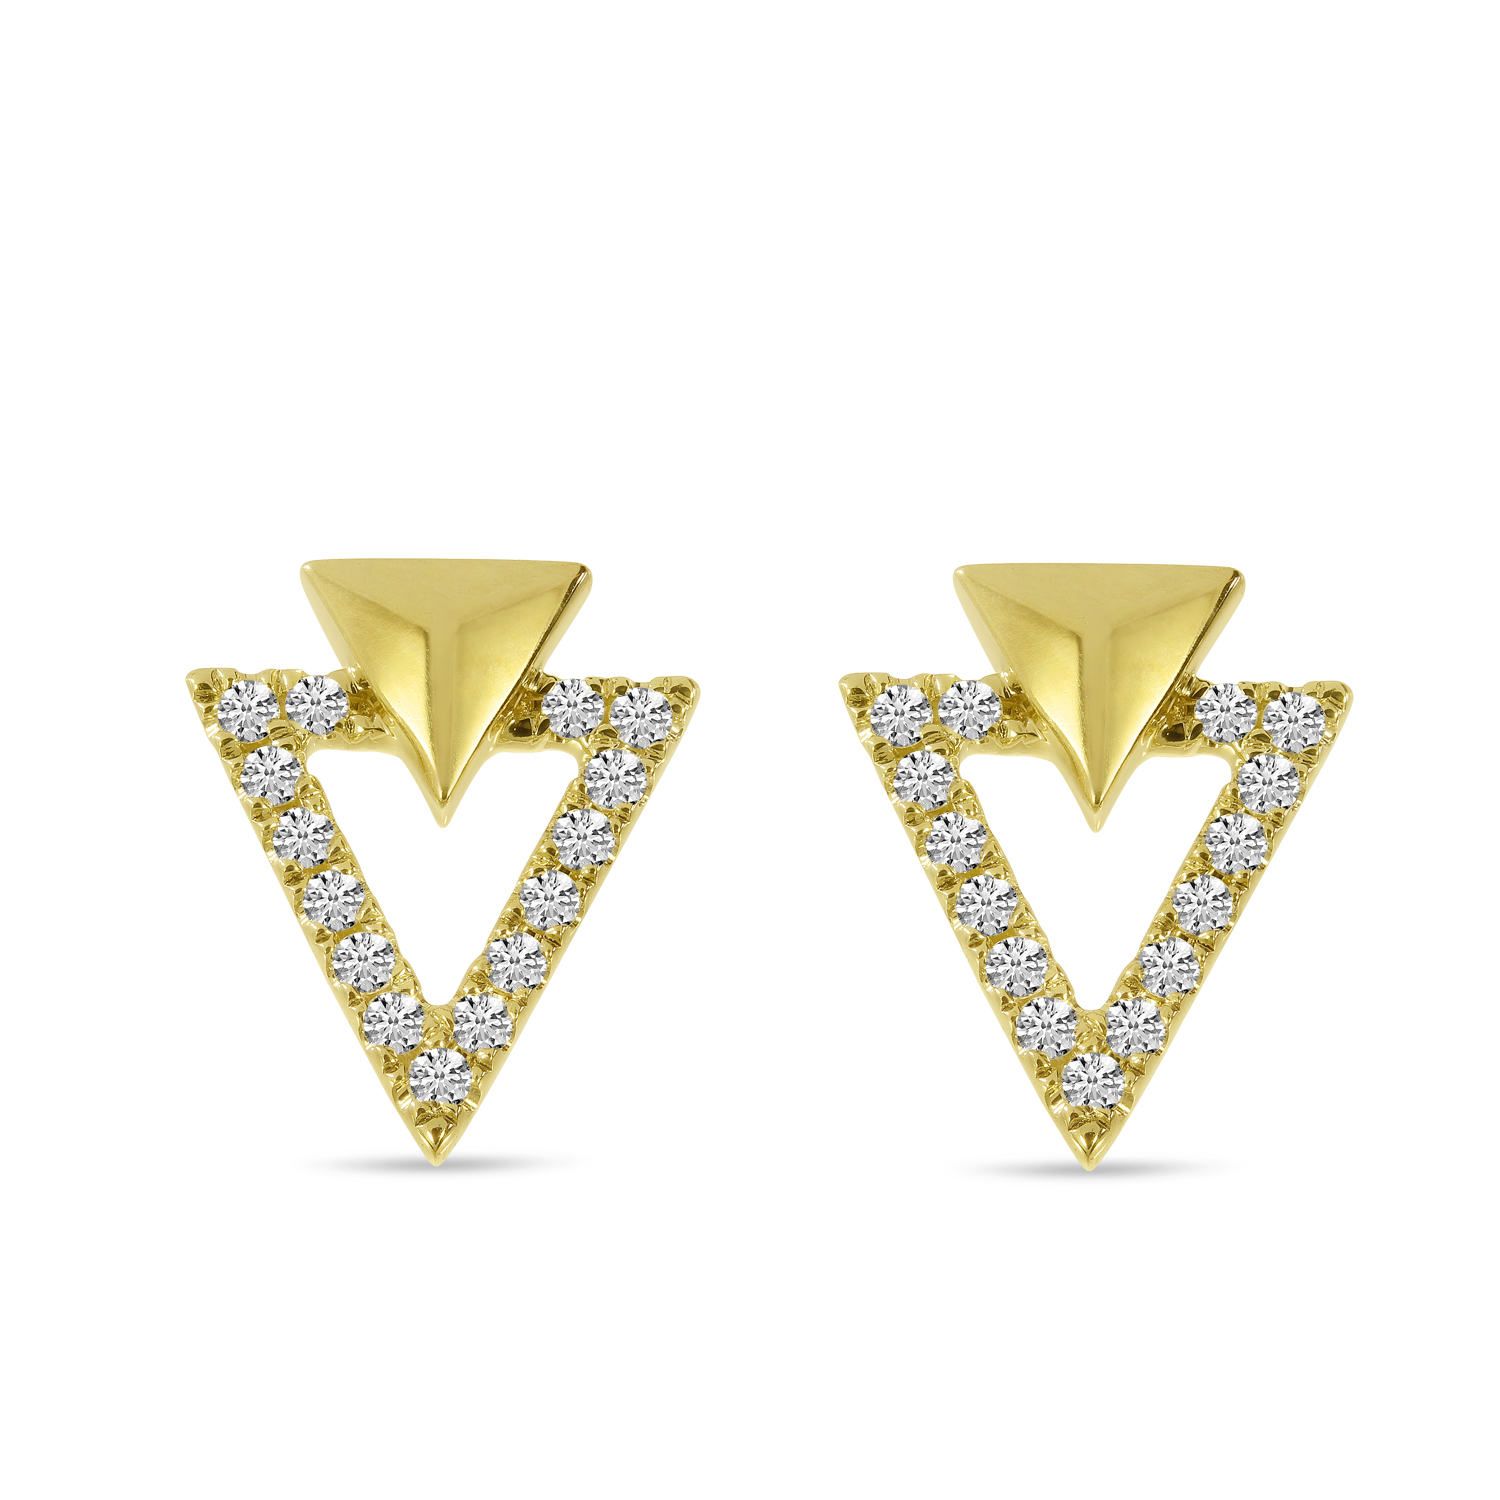 14K Yellow Gold Diamond Double Triangle Earrings